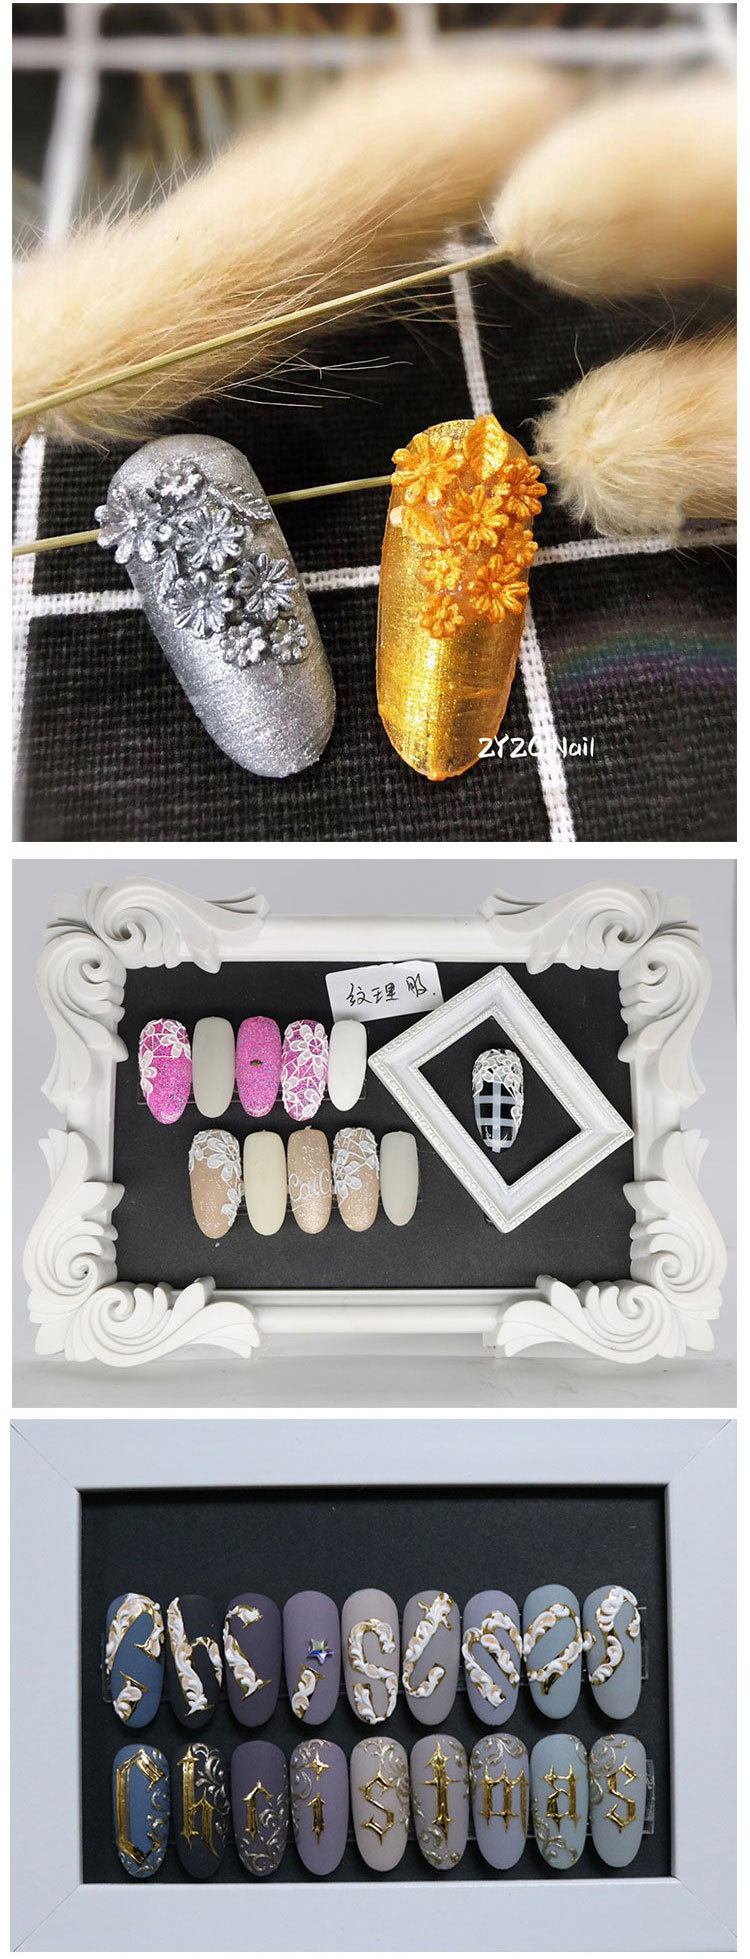 Hot sale emboss paste nails art 3d uv embossing gel paint nail painting